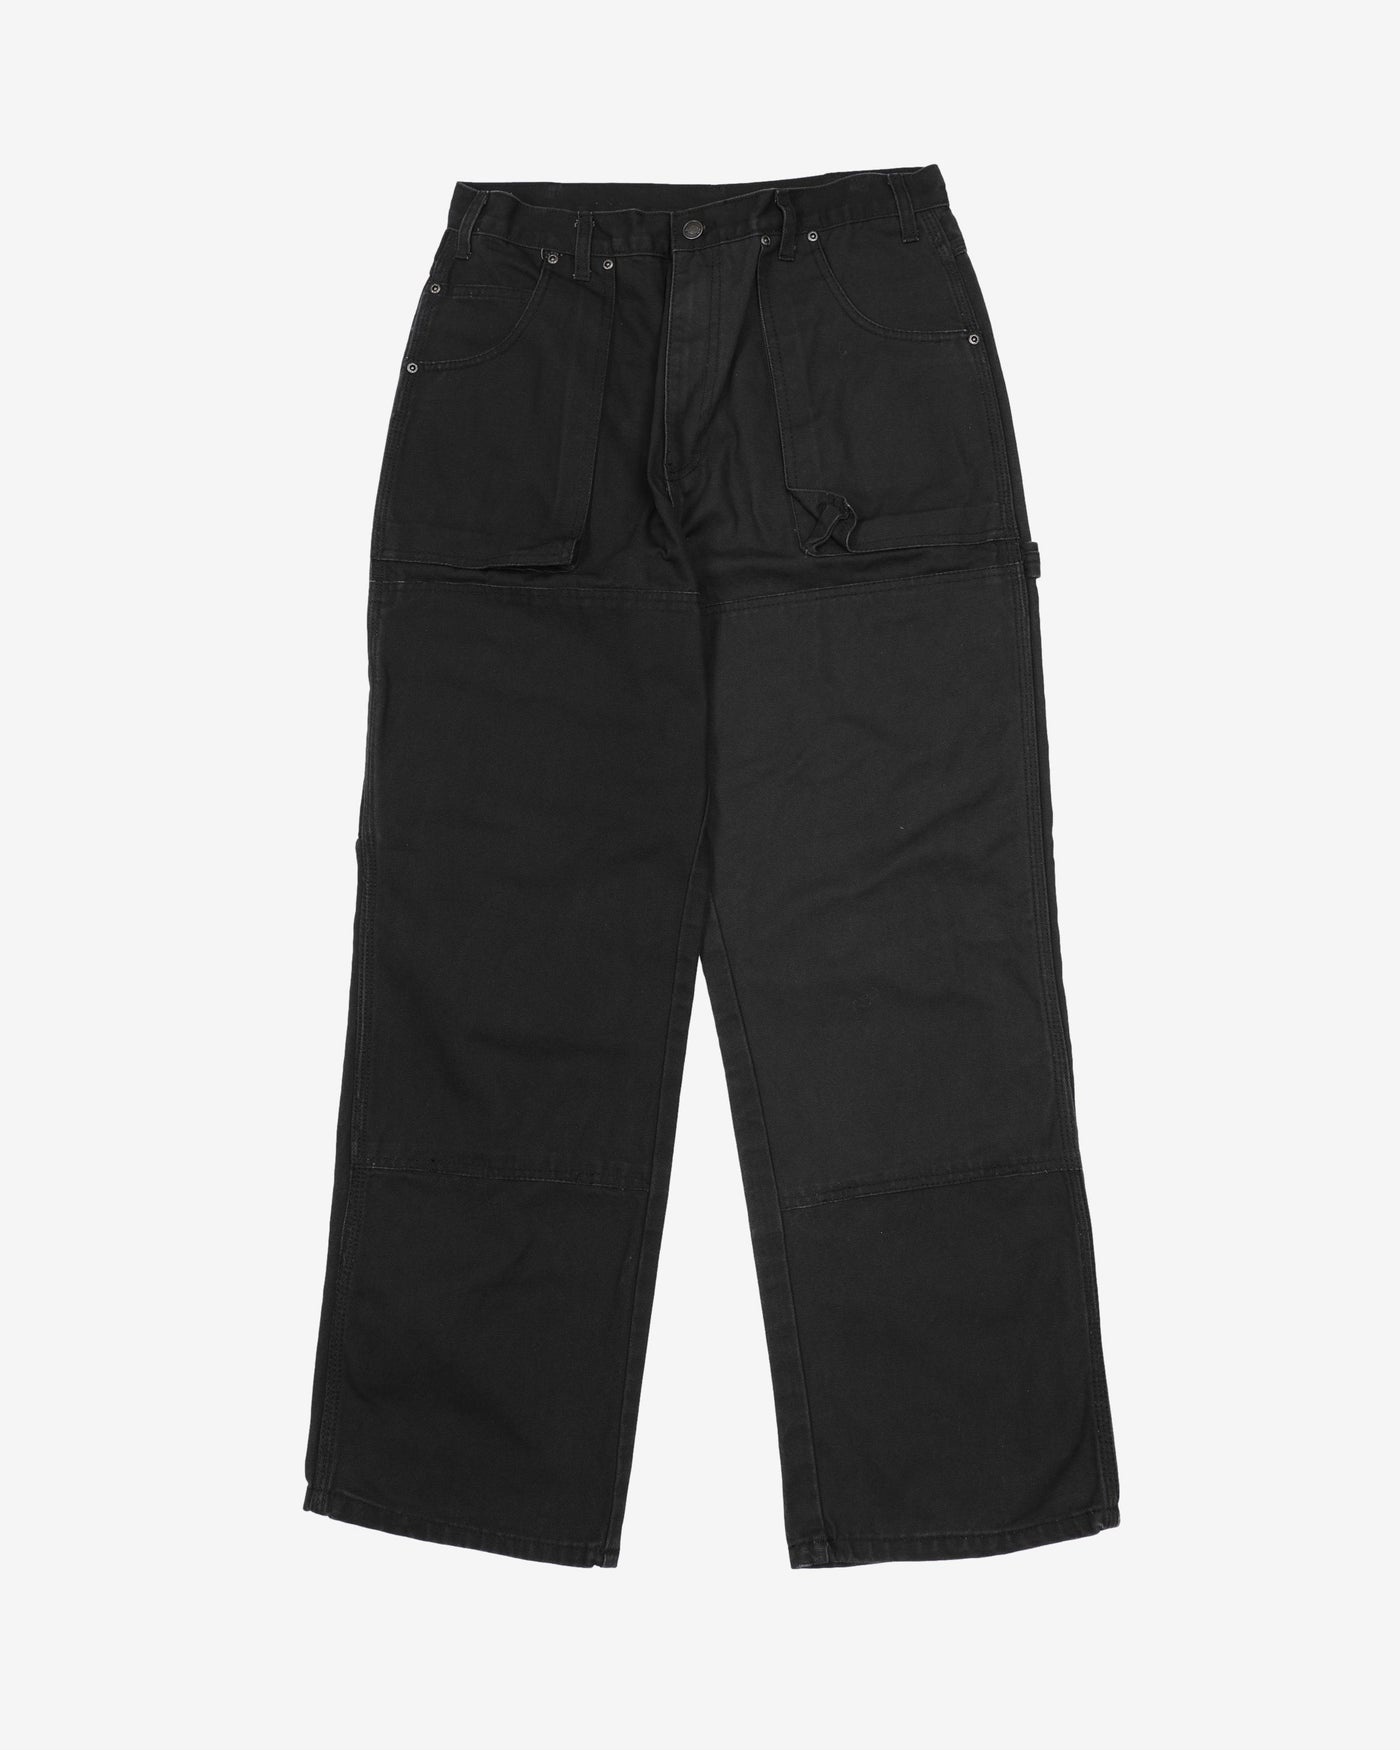 Dickies Black Double Knee Workwear Jeans - W32 L28